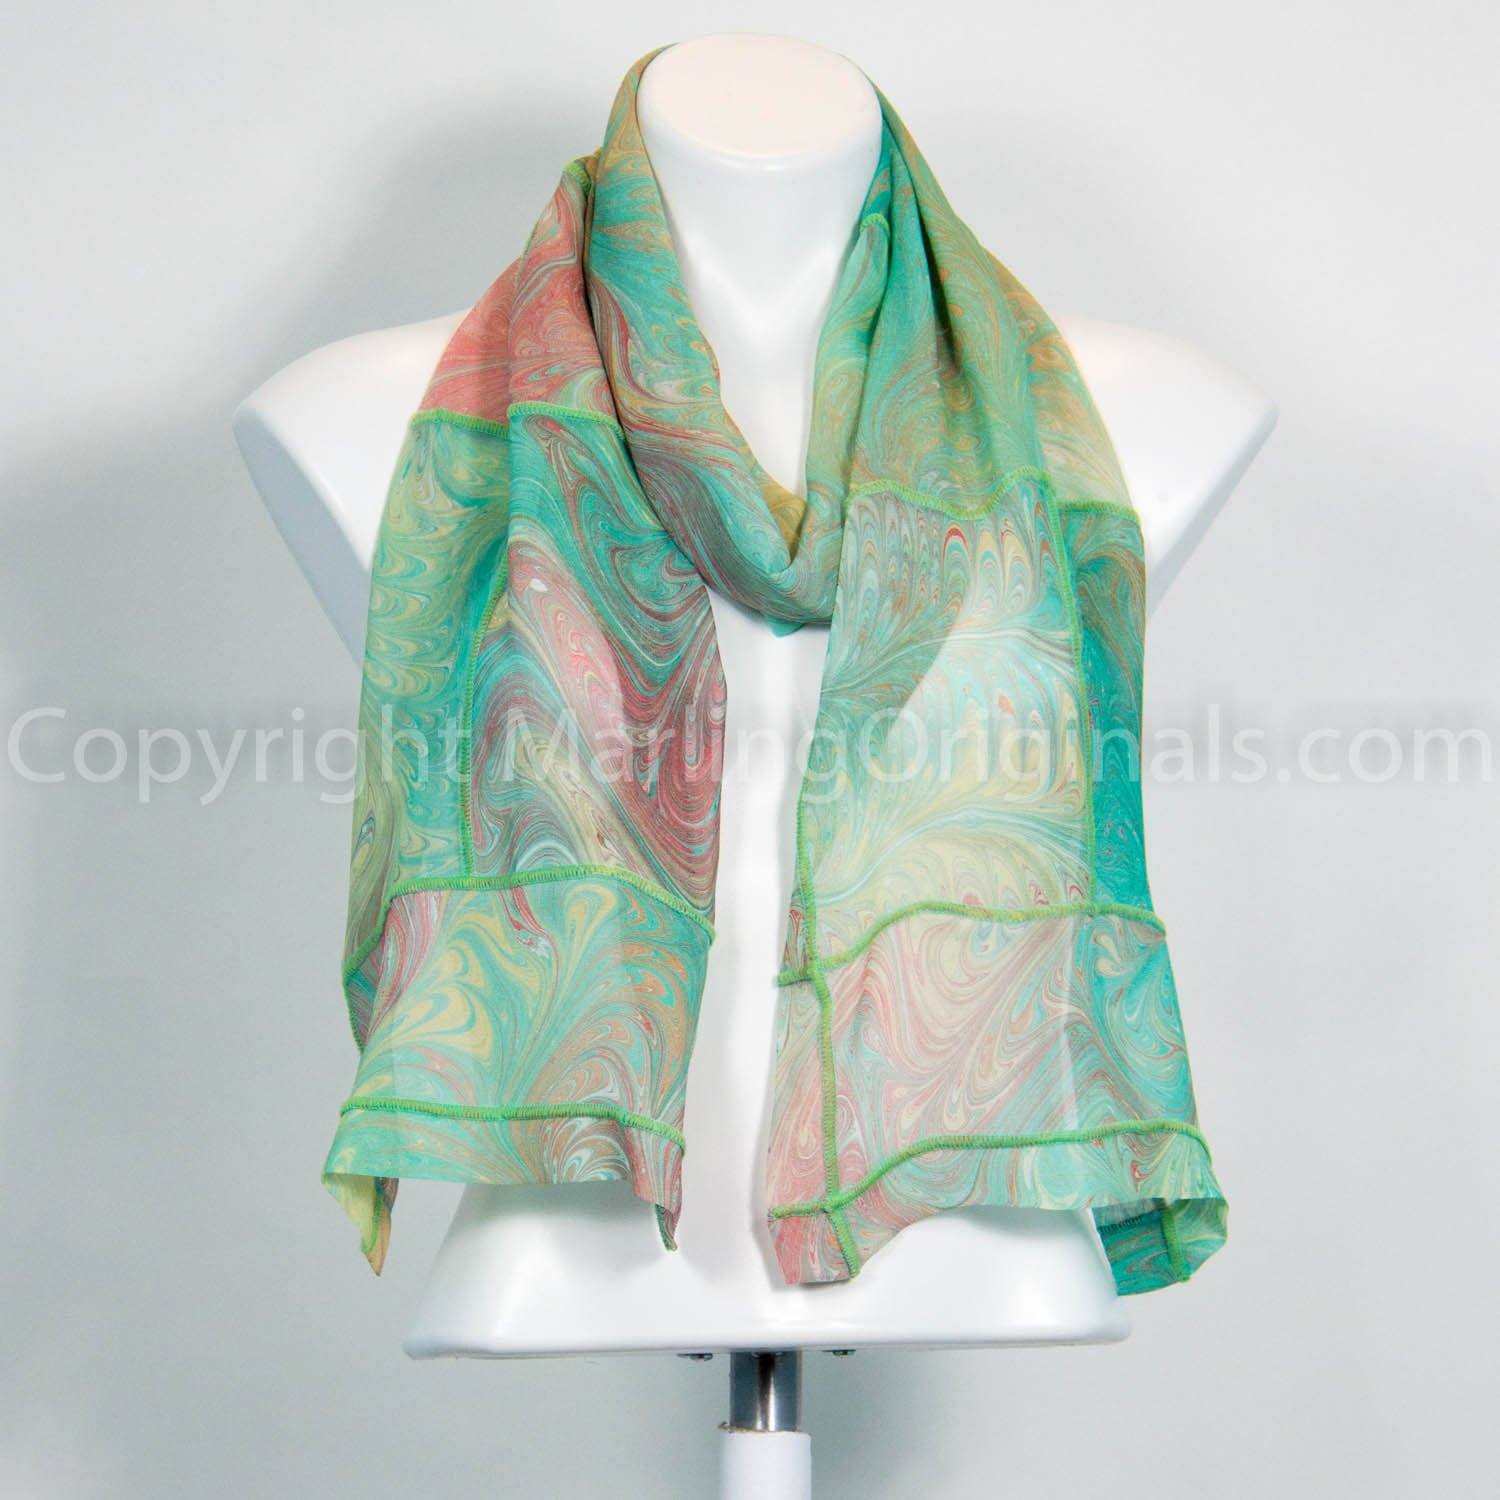 marbled chiffon silk scarf in mint, peach and lime green.  Pretty decorative edge.